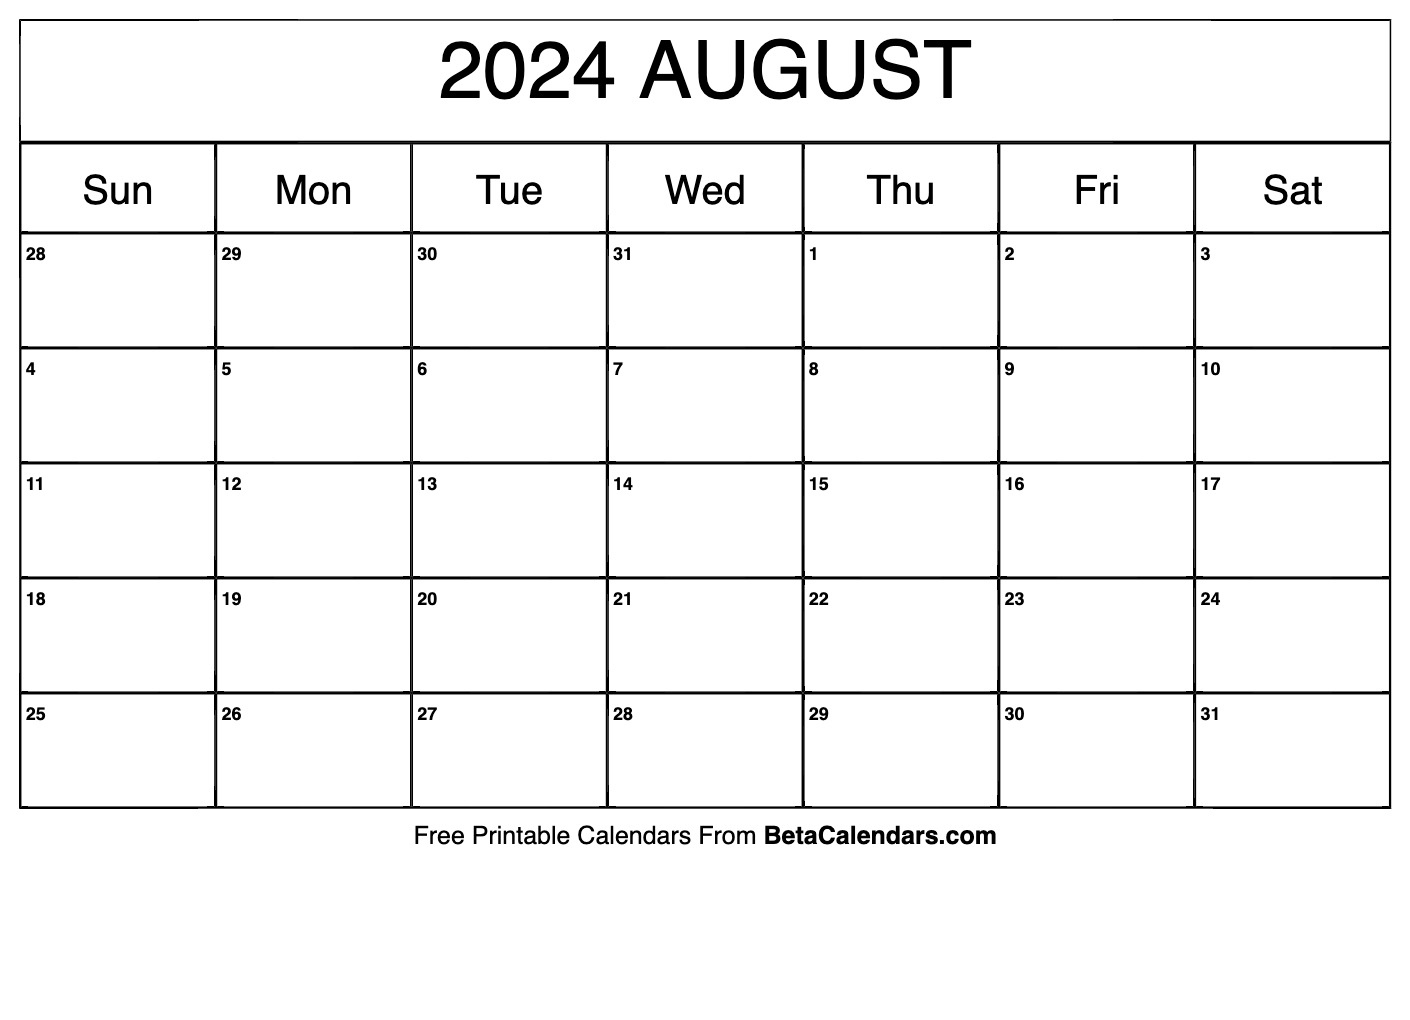 Free Printable August 2024 Calendar intended for Free Printable Calendar Aug 2024